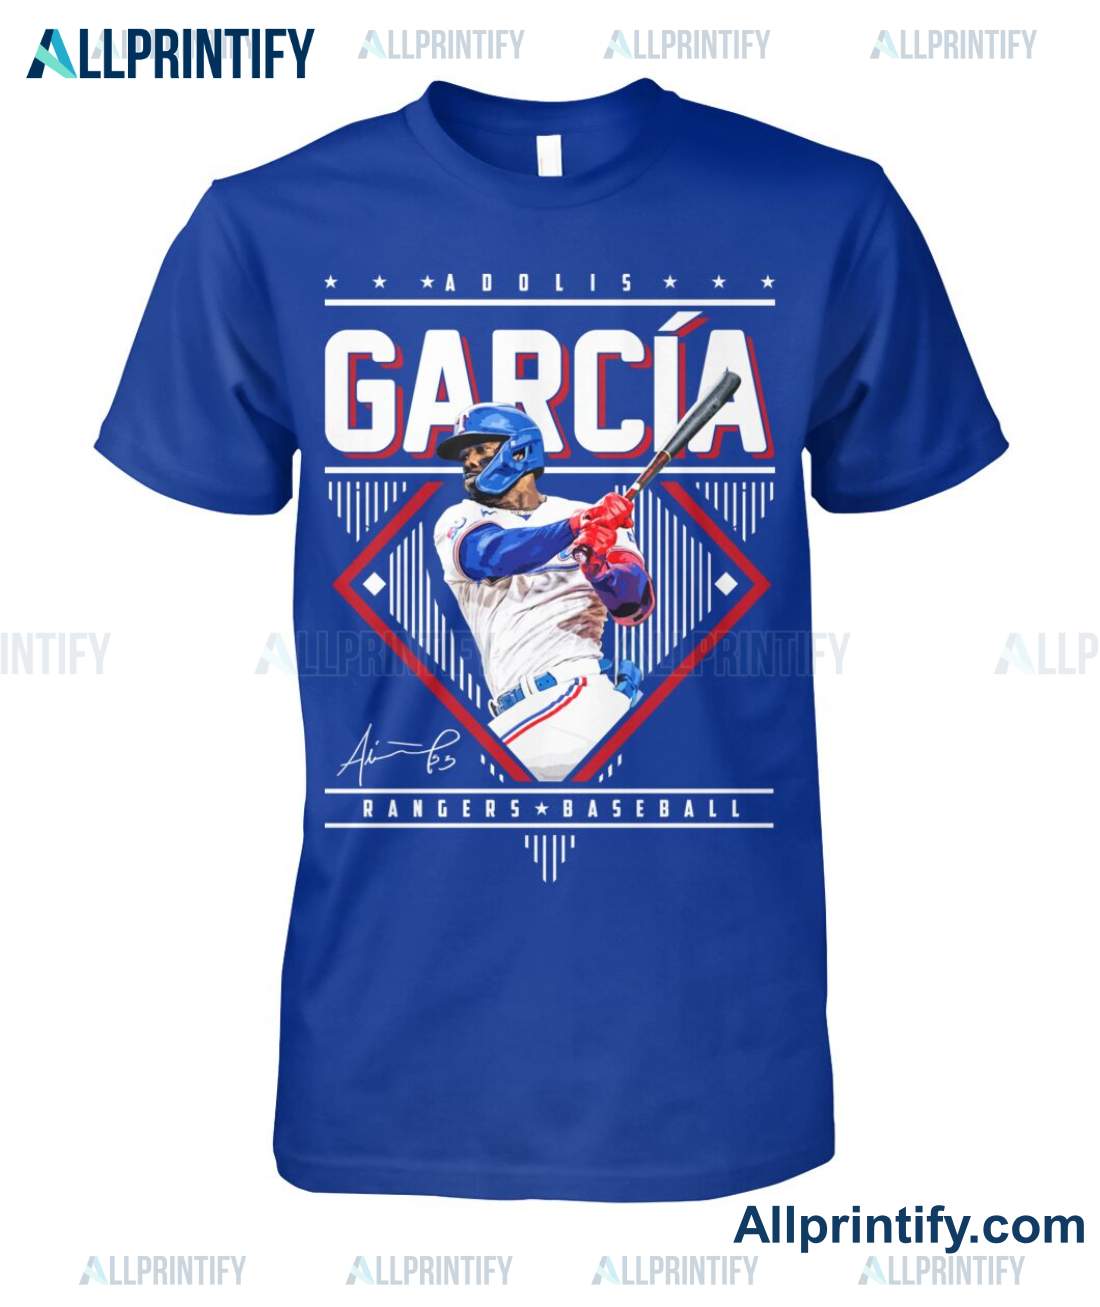 Adolis Garcia Texas Rangers Baseball Signatures Shirt a